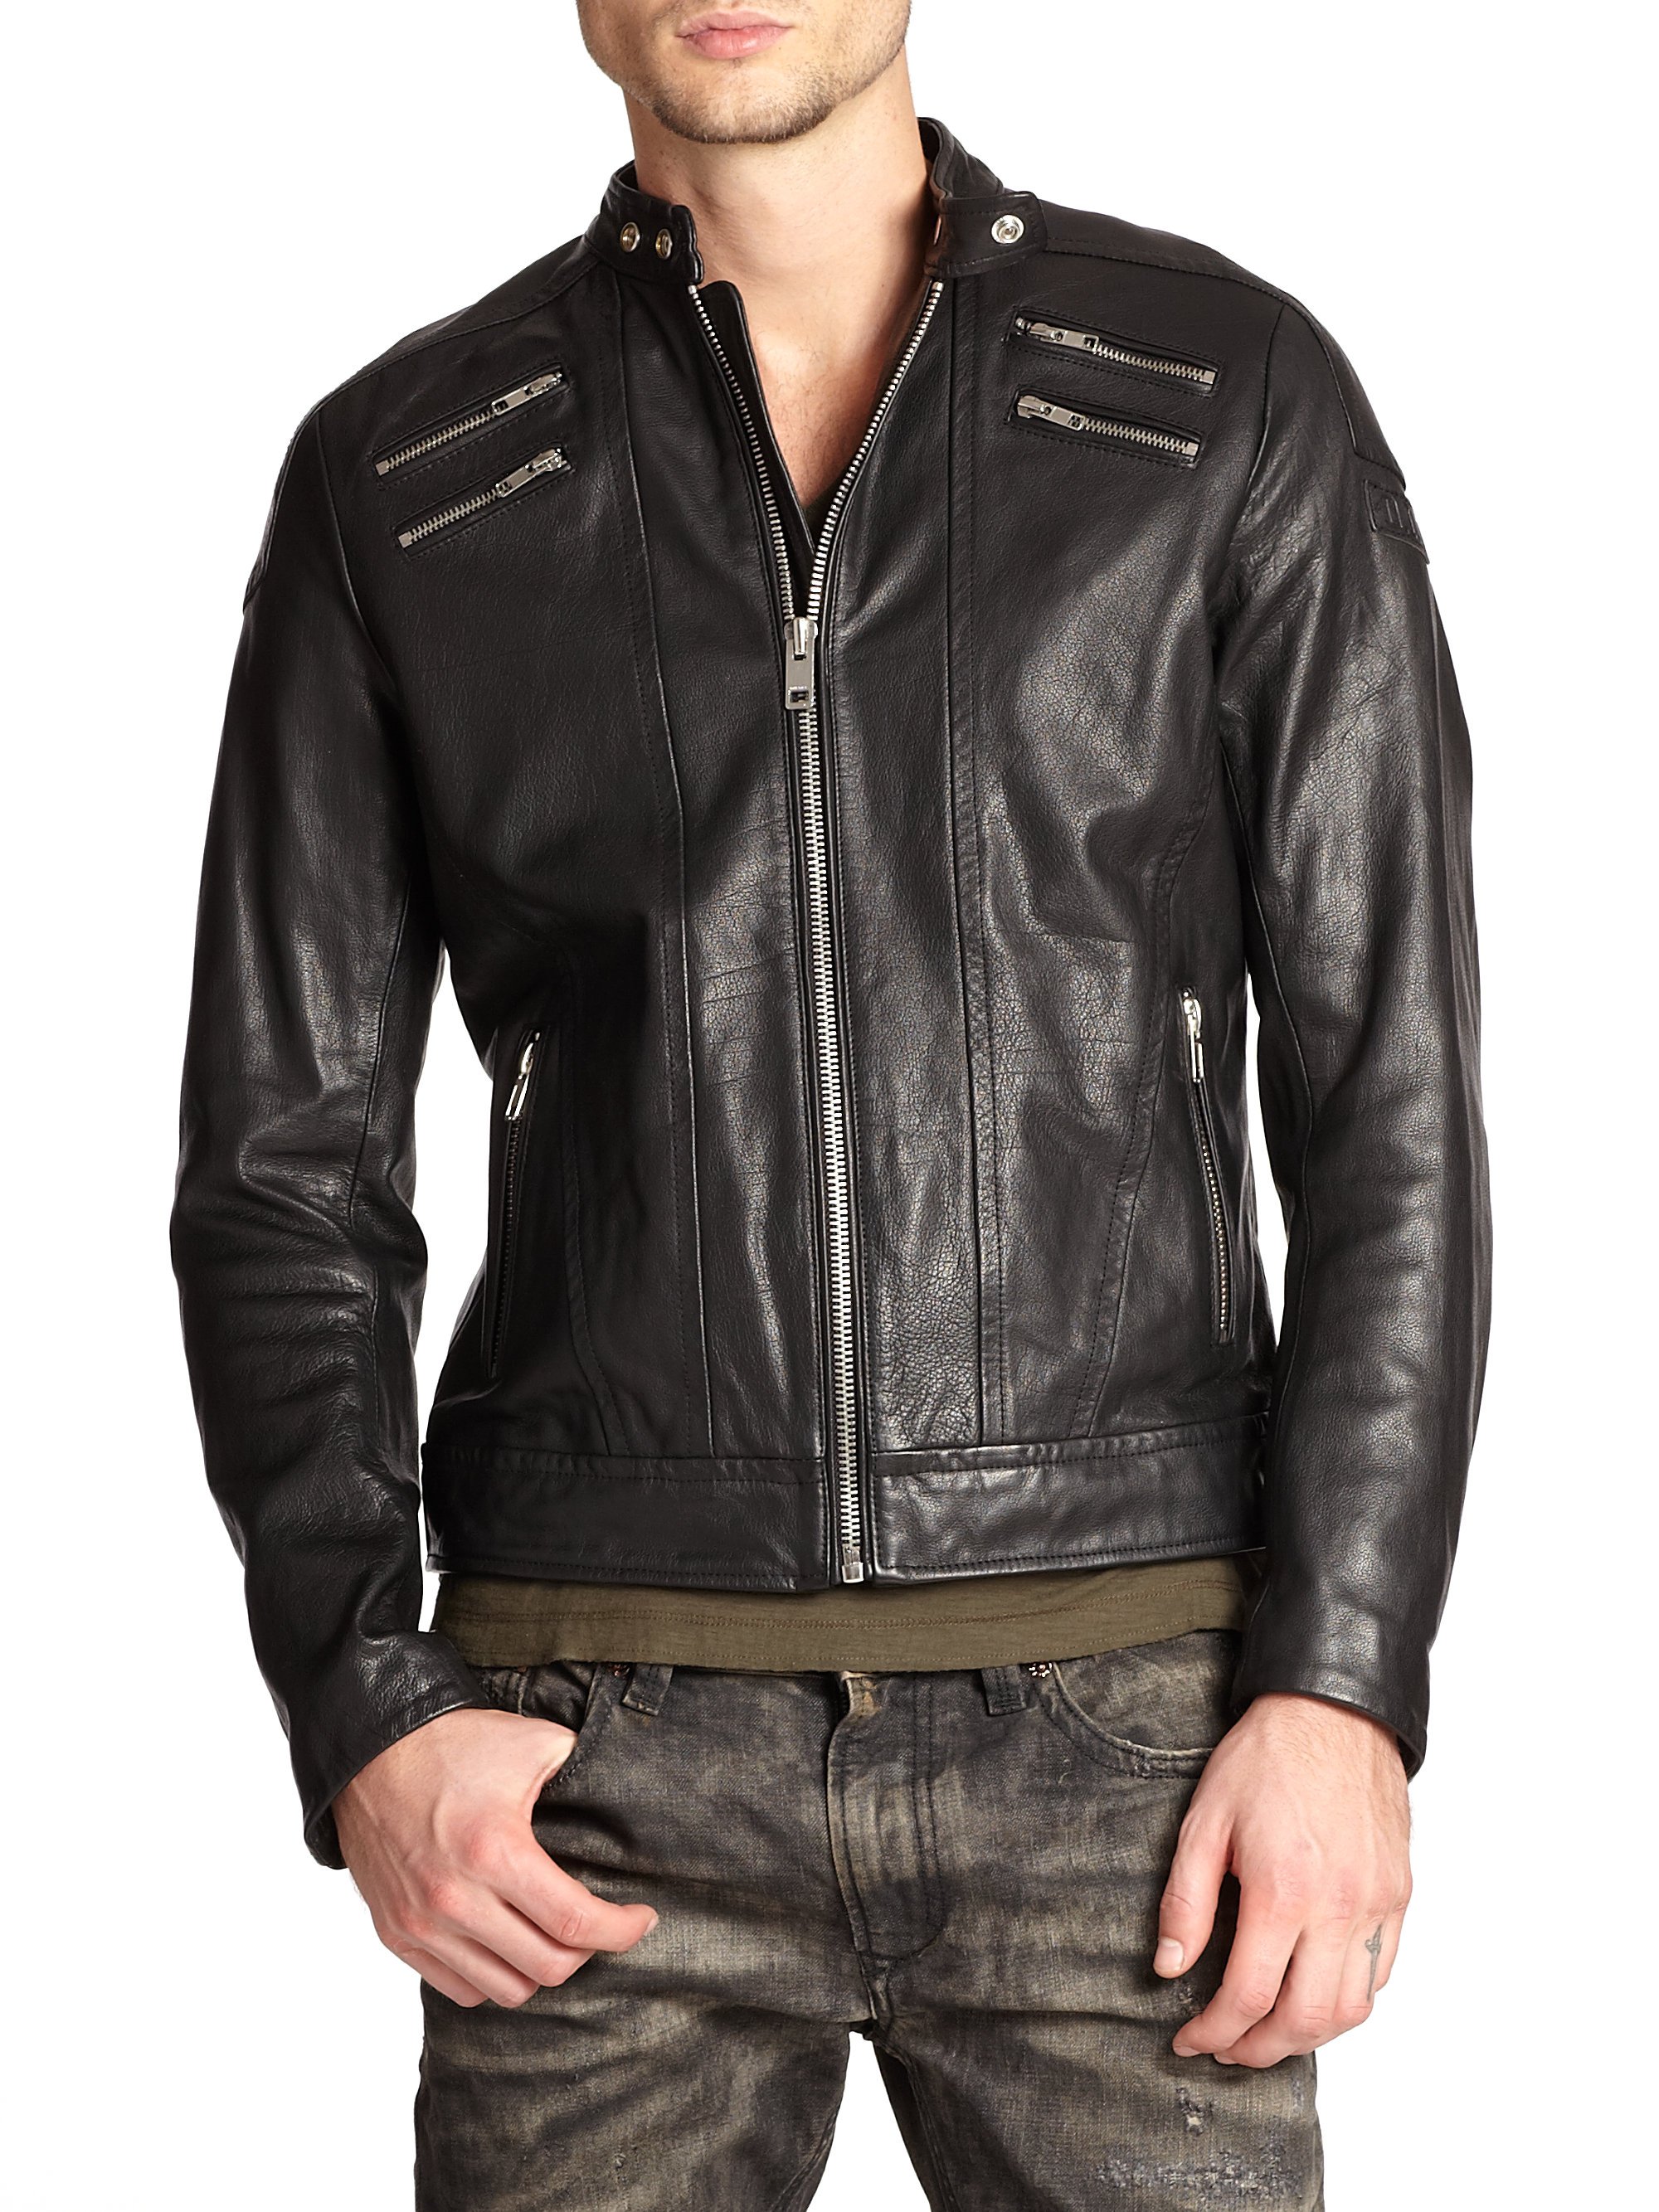 DIESEL Buffalo Washed Leather Jacket in Black for Men - Lyst